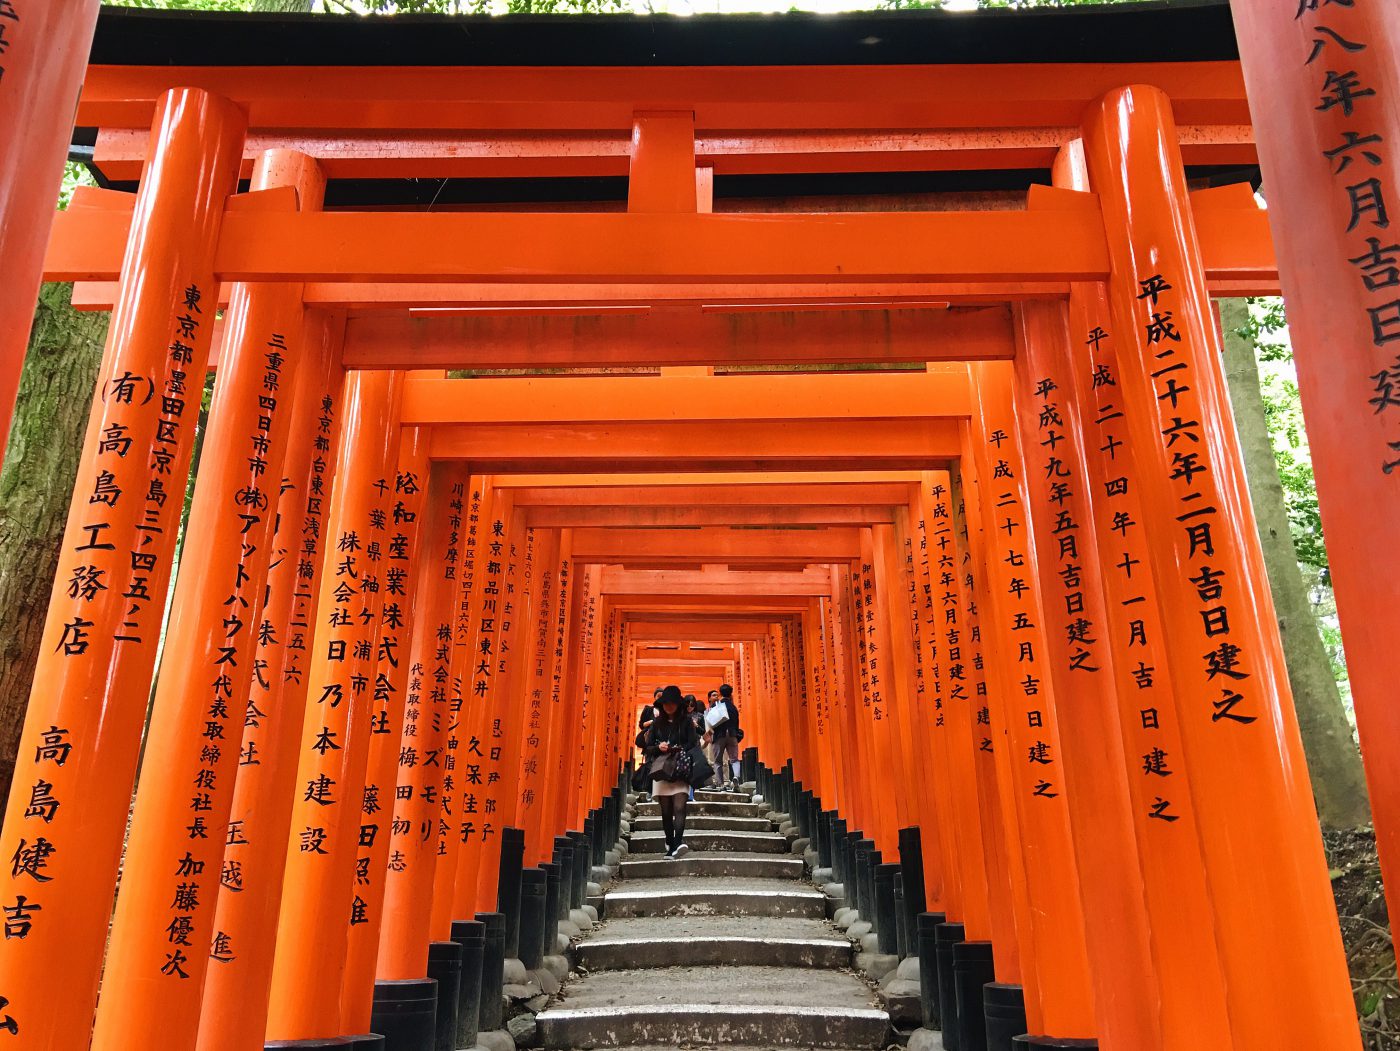 The rows after rows of torii gates at Fushimi Inari